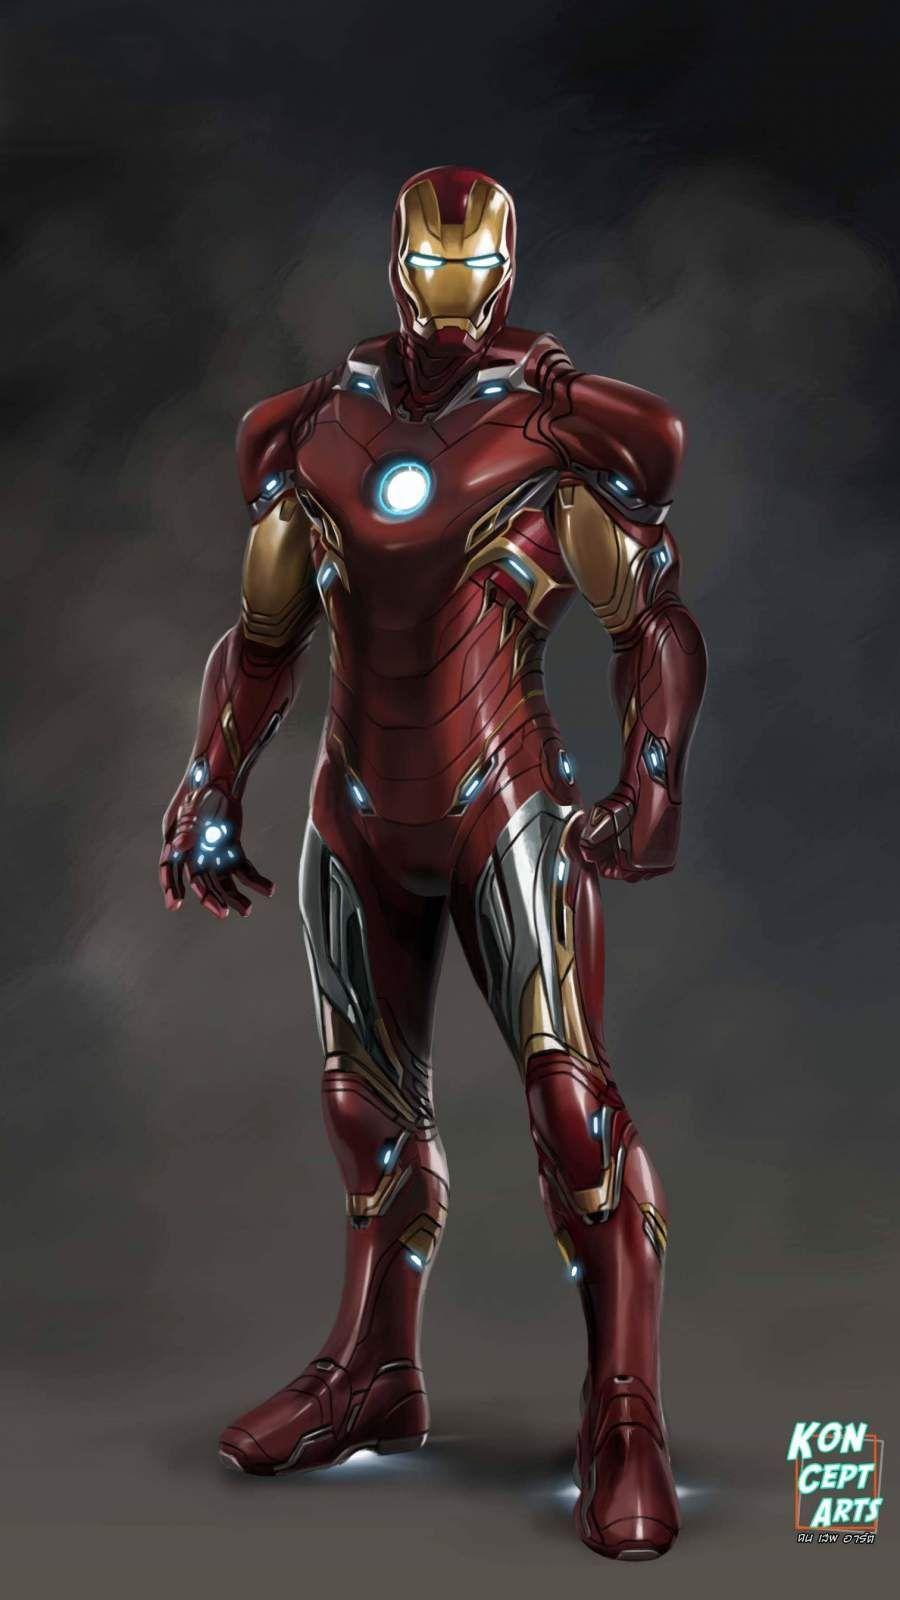 The Iron Man MK 85 Armor IPhone Wallpaper. Marvel iron man, Iron